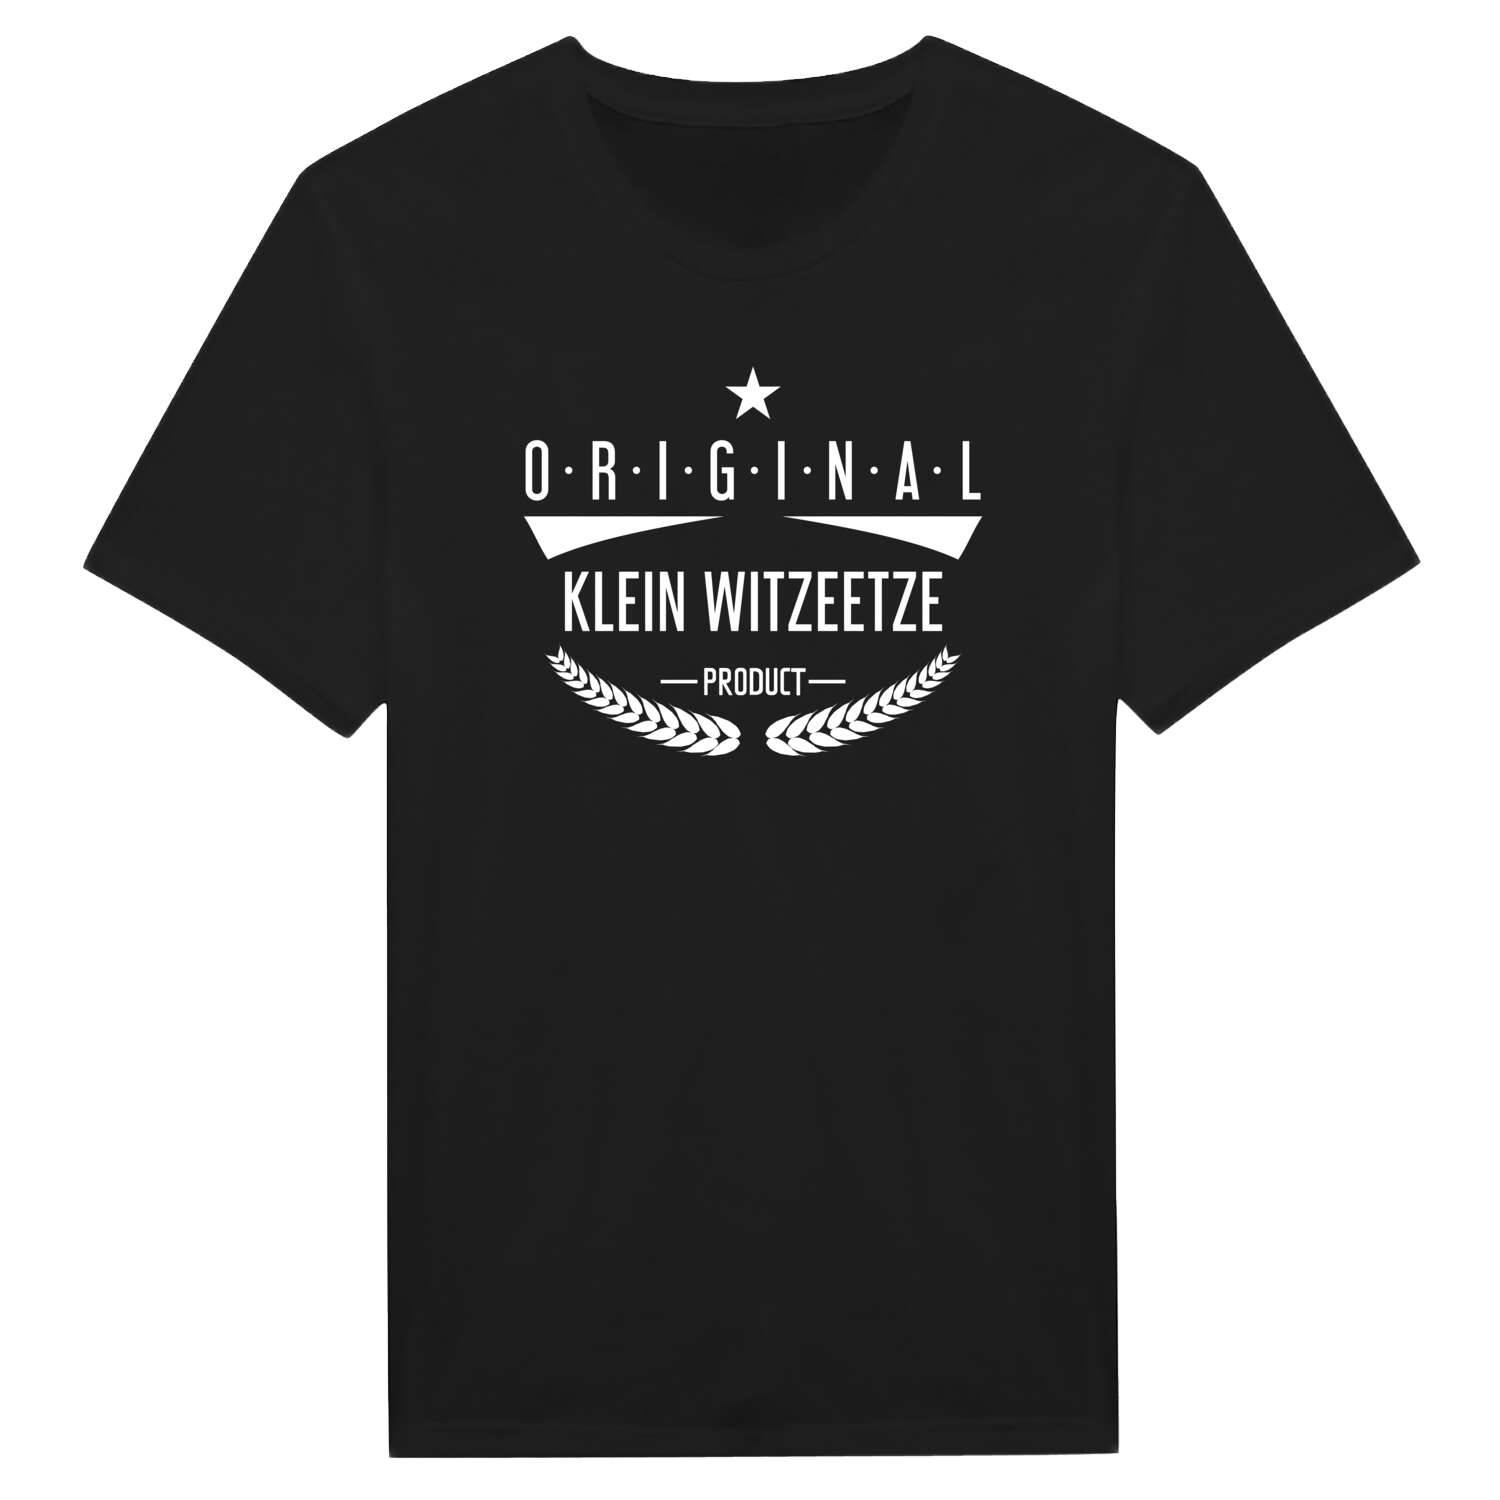 Klein Witzeetze T-Shirt »Original Product«